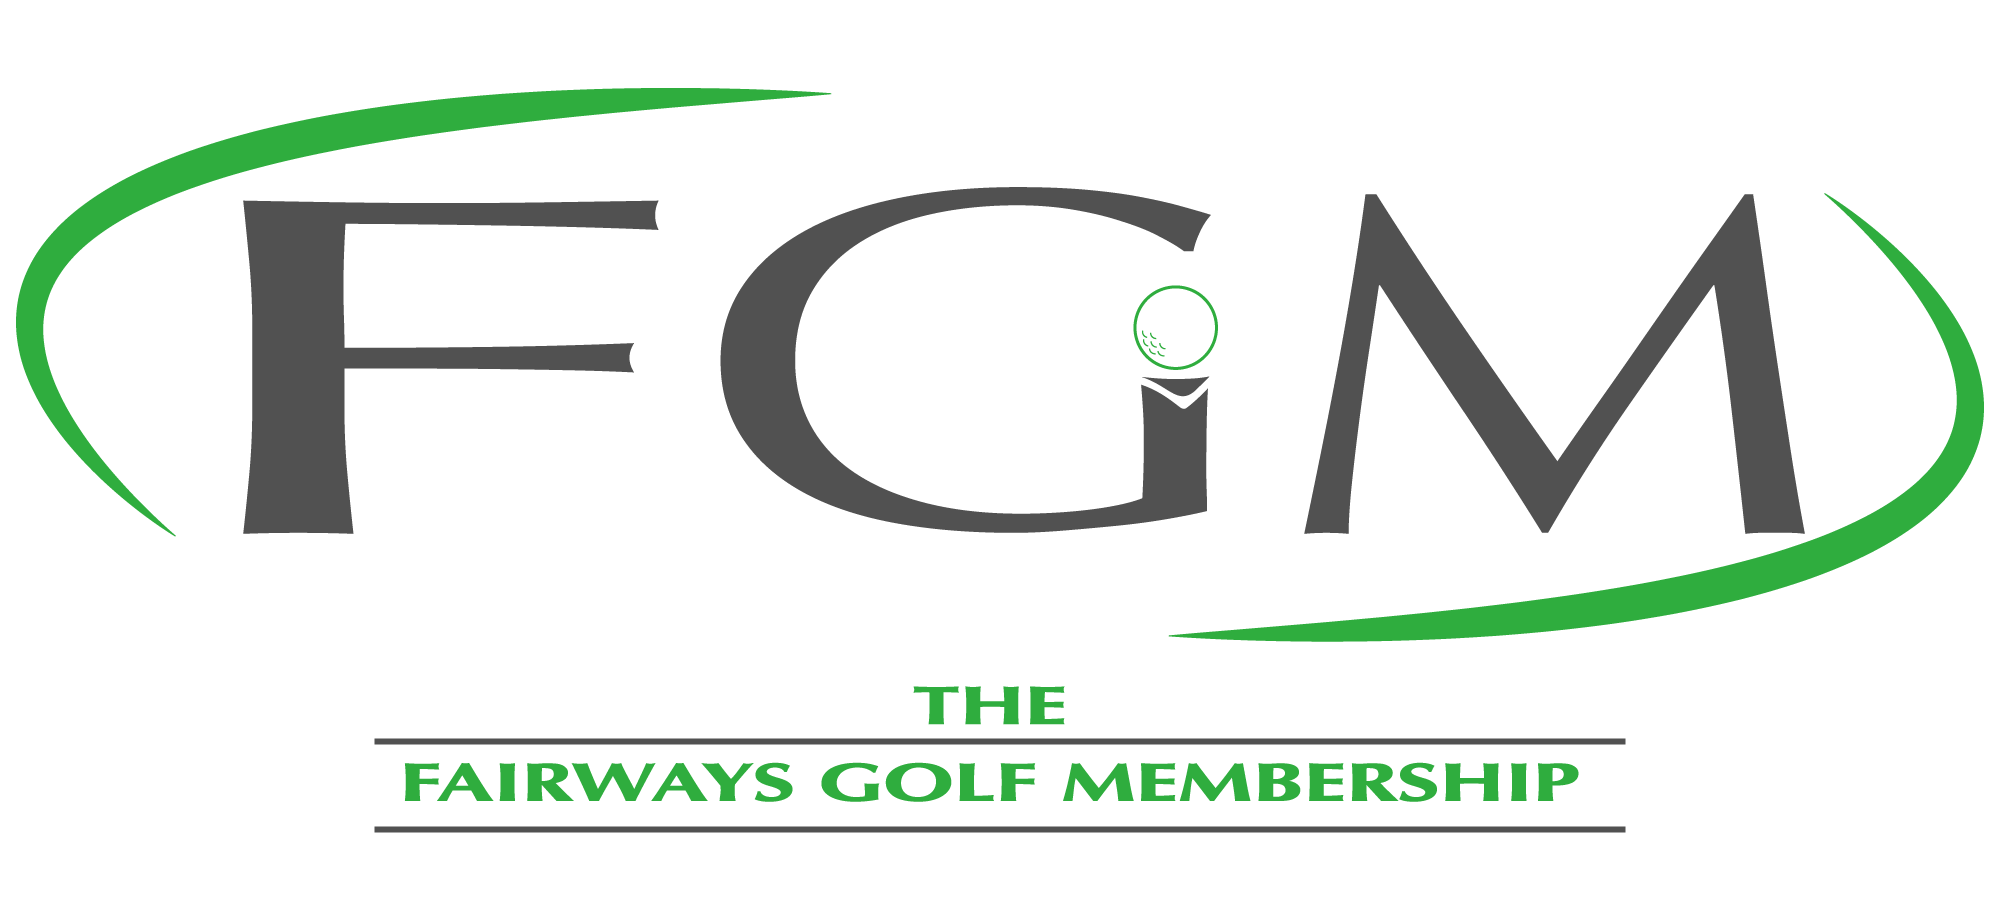 Cleveland Golf Logo - Cleveland Golf News. Fairways Golf Membership